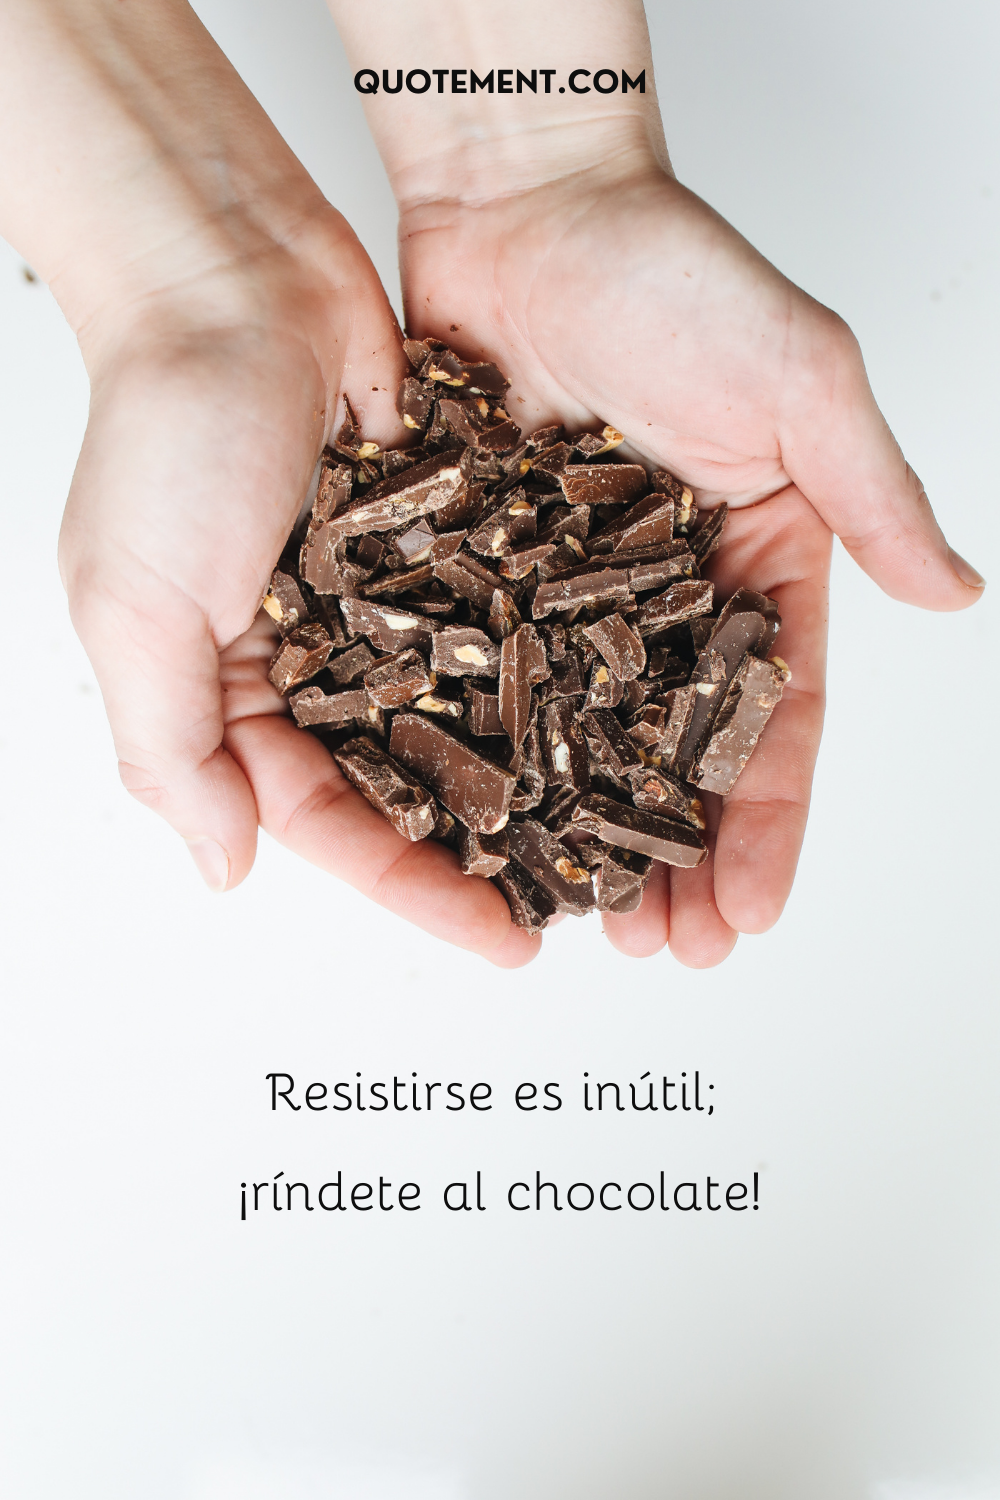 Resistirse es inútil; ¡ríndete al chocolate!